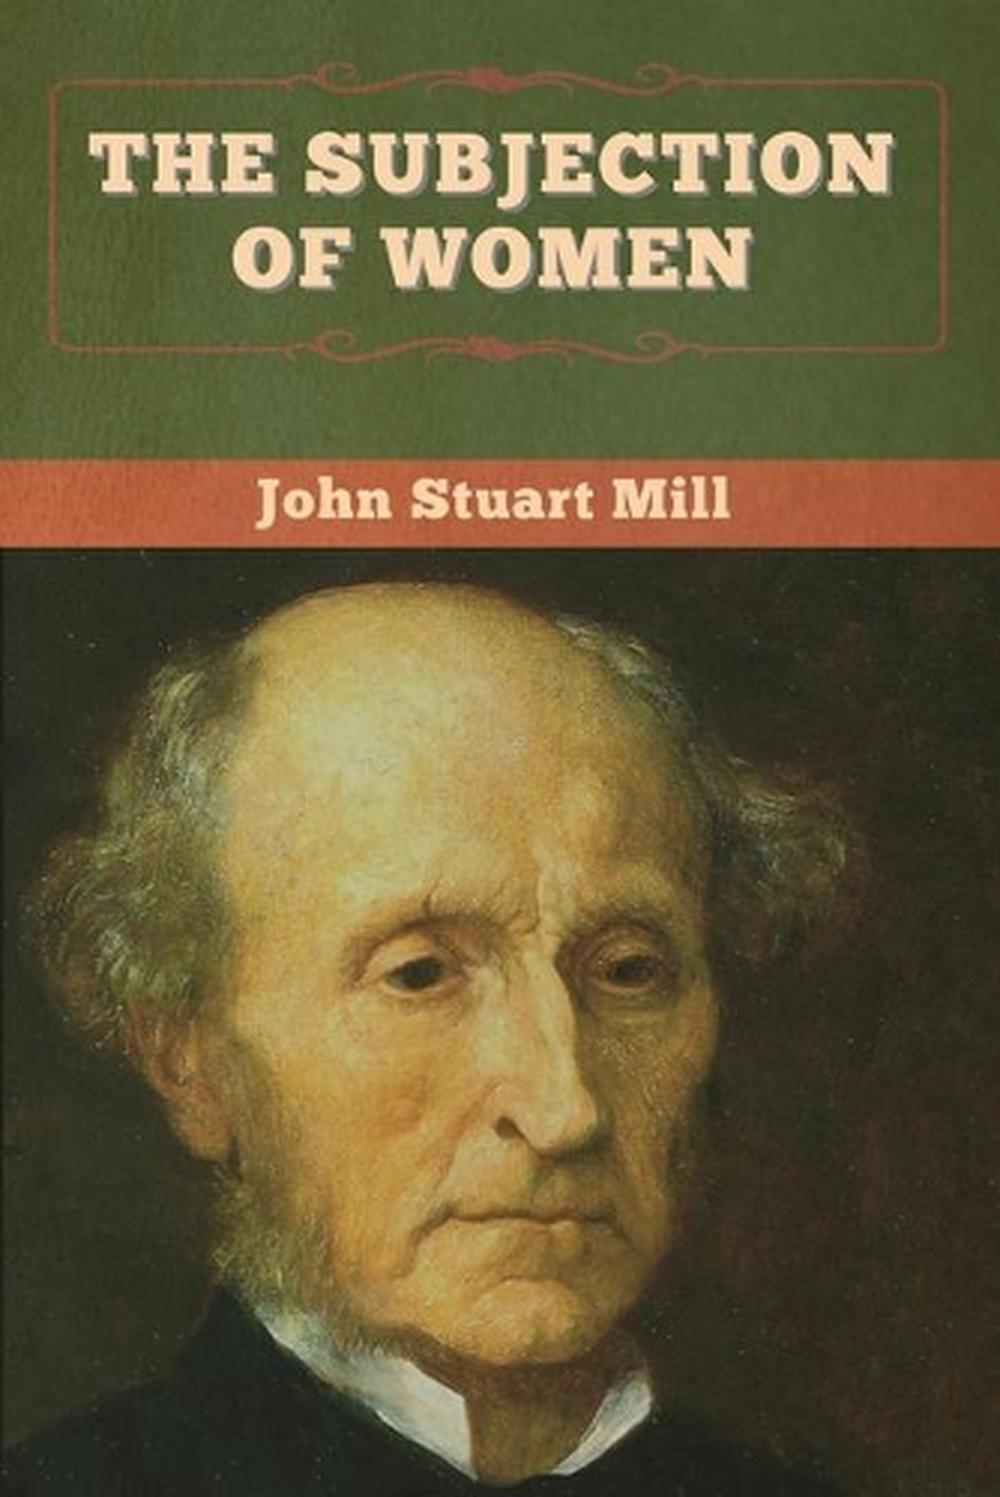 john stuart mill the subjection of women 1869